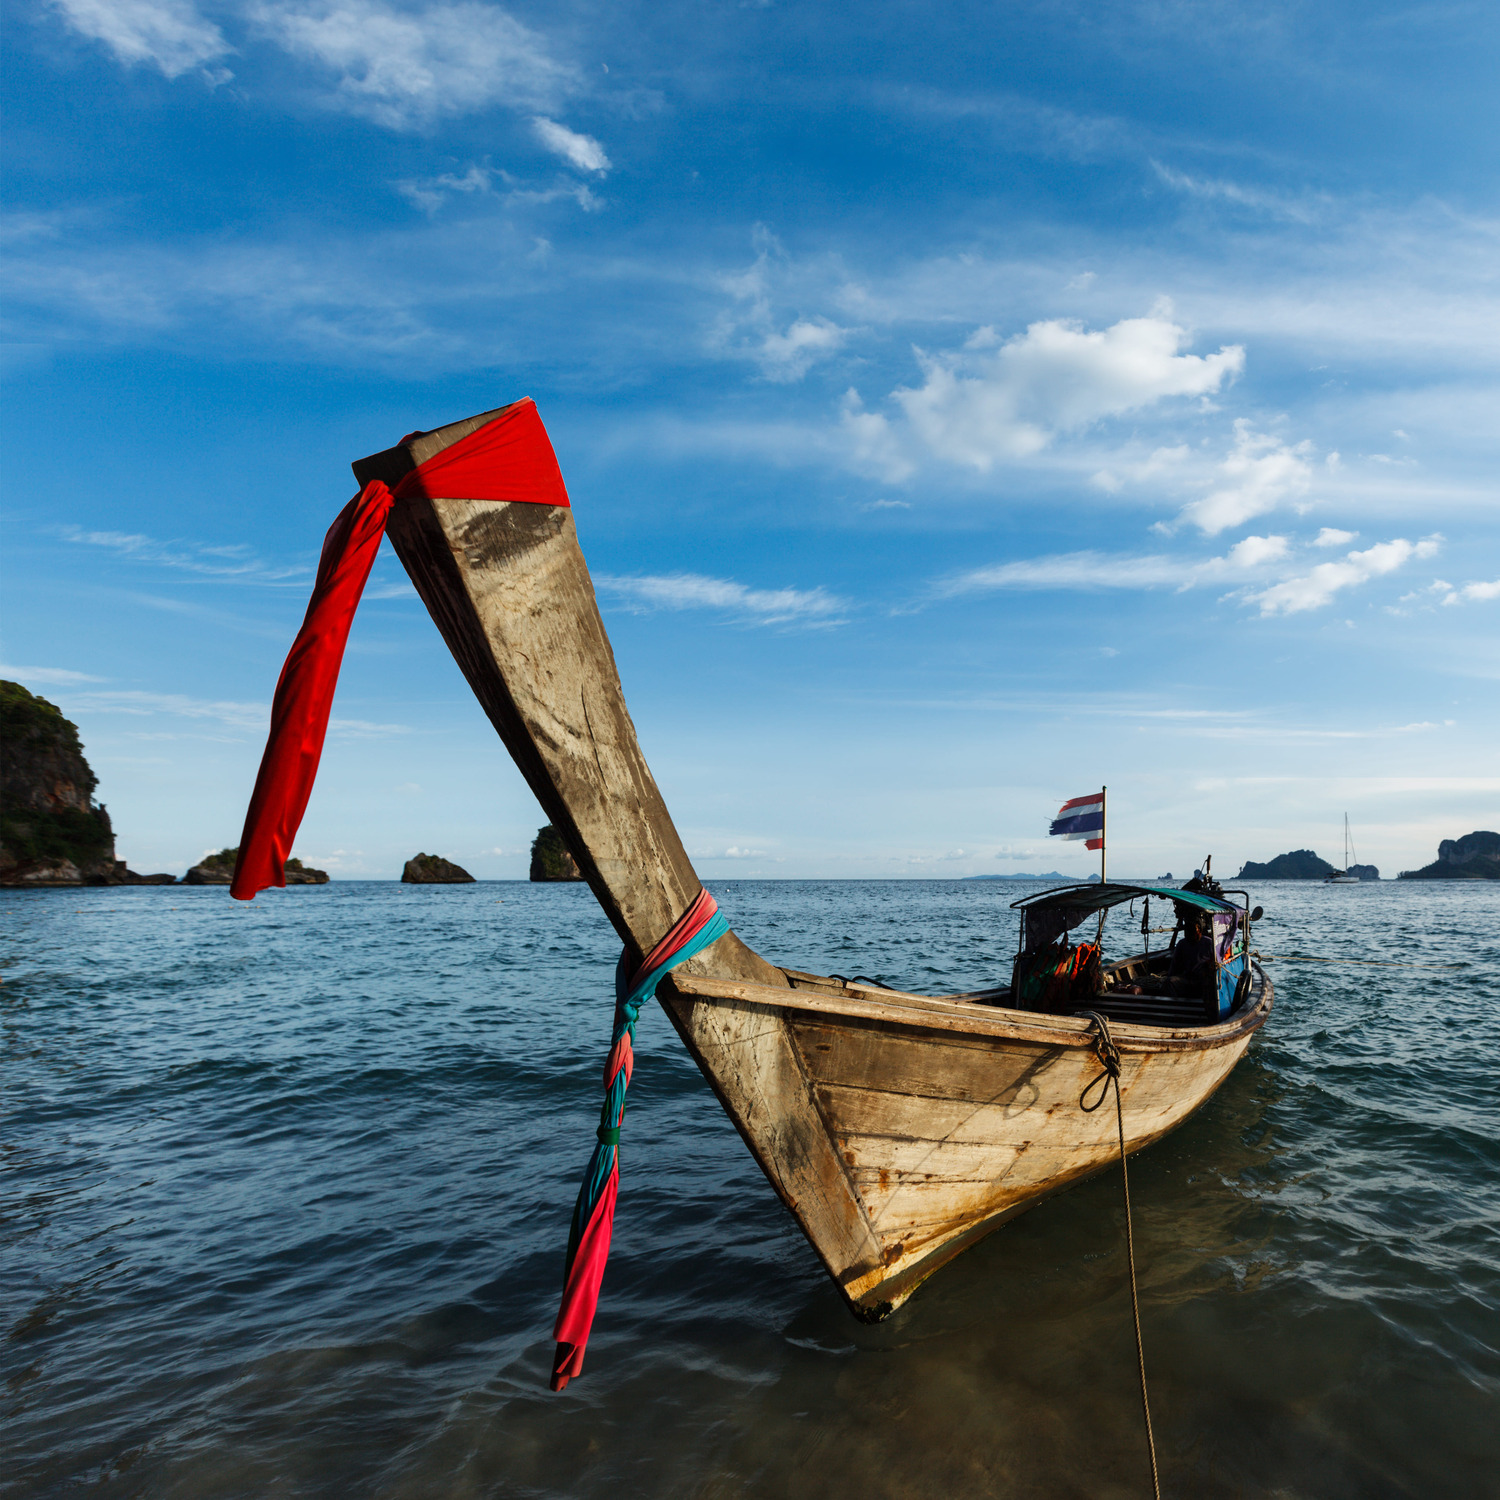 long-tail-boat-on-beach-thailand-2021-08-26-22-58-16-utc (1) (1)